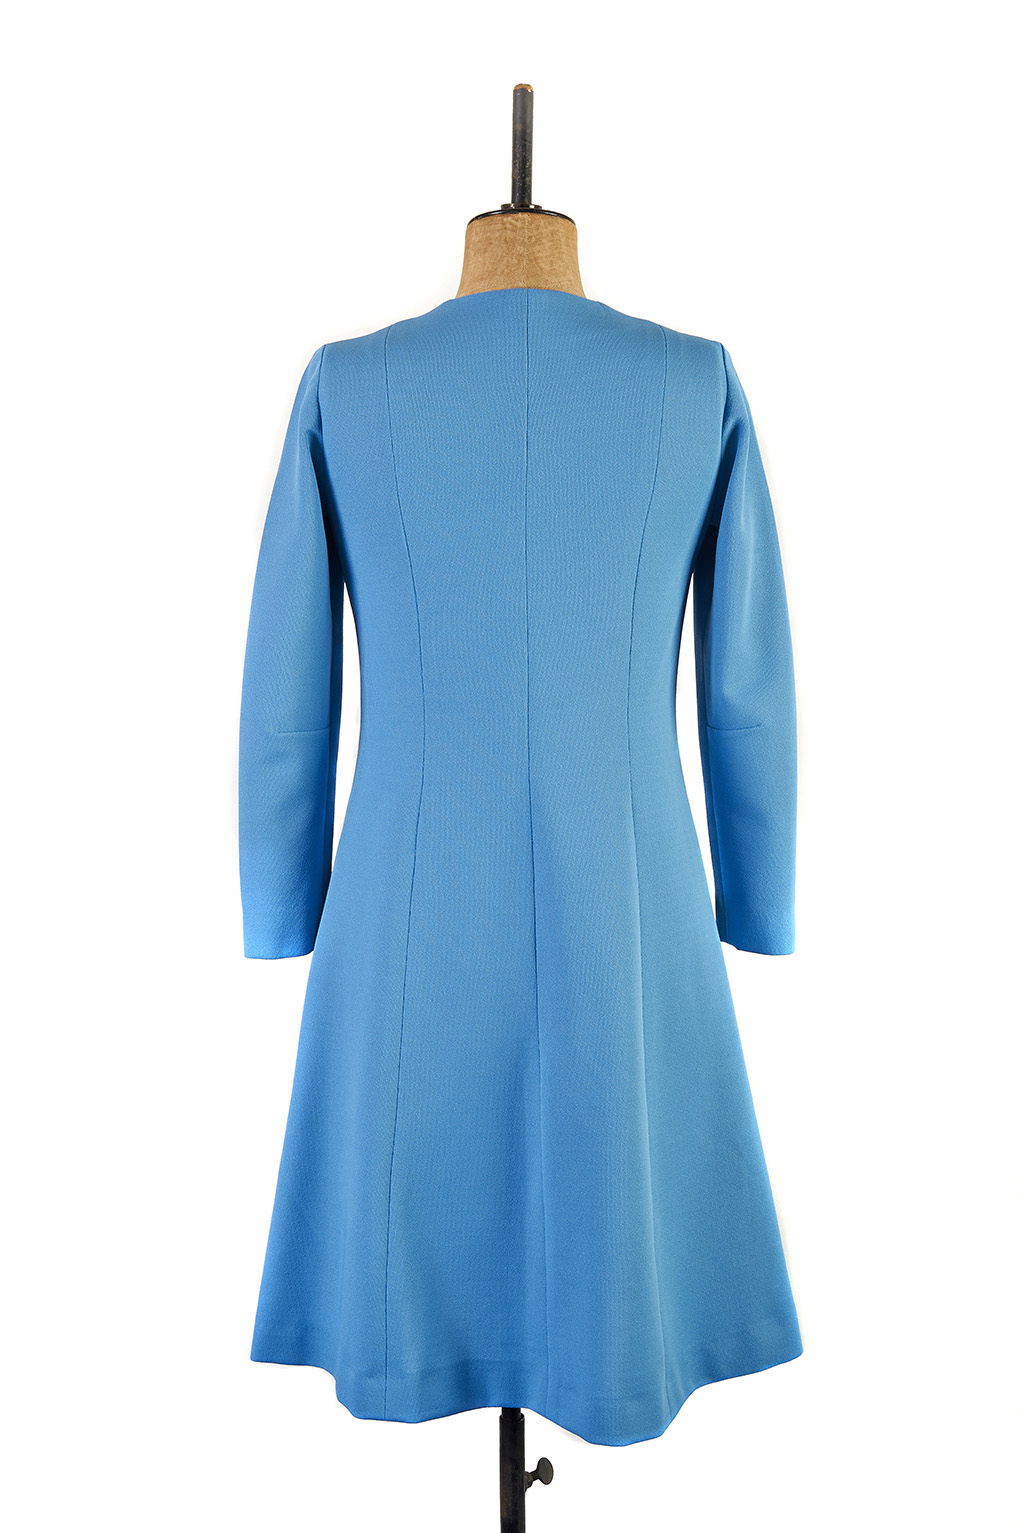 Blue Day Dress c.1970